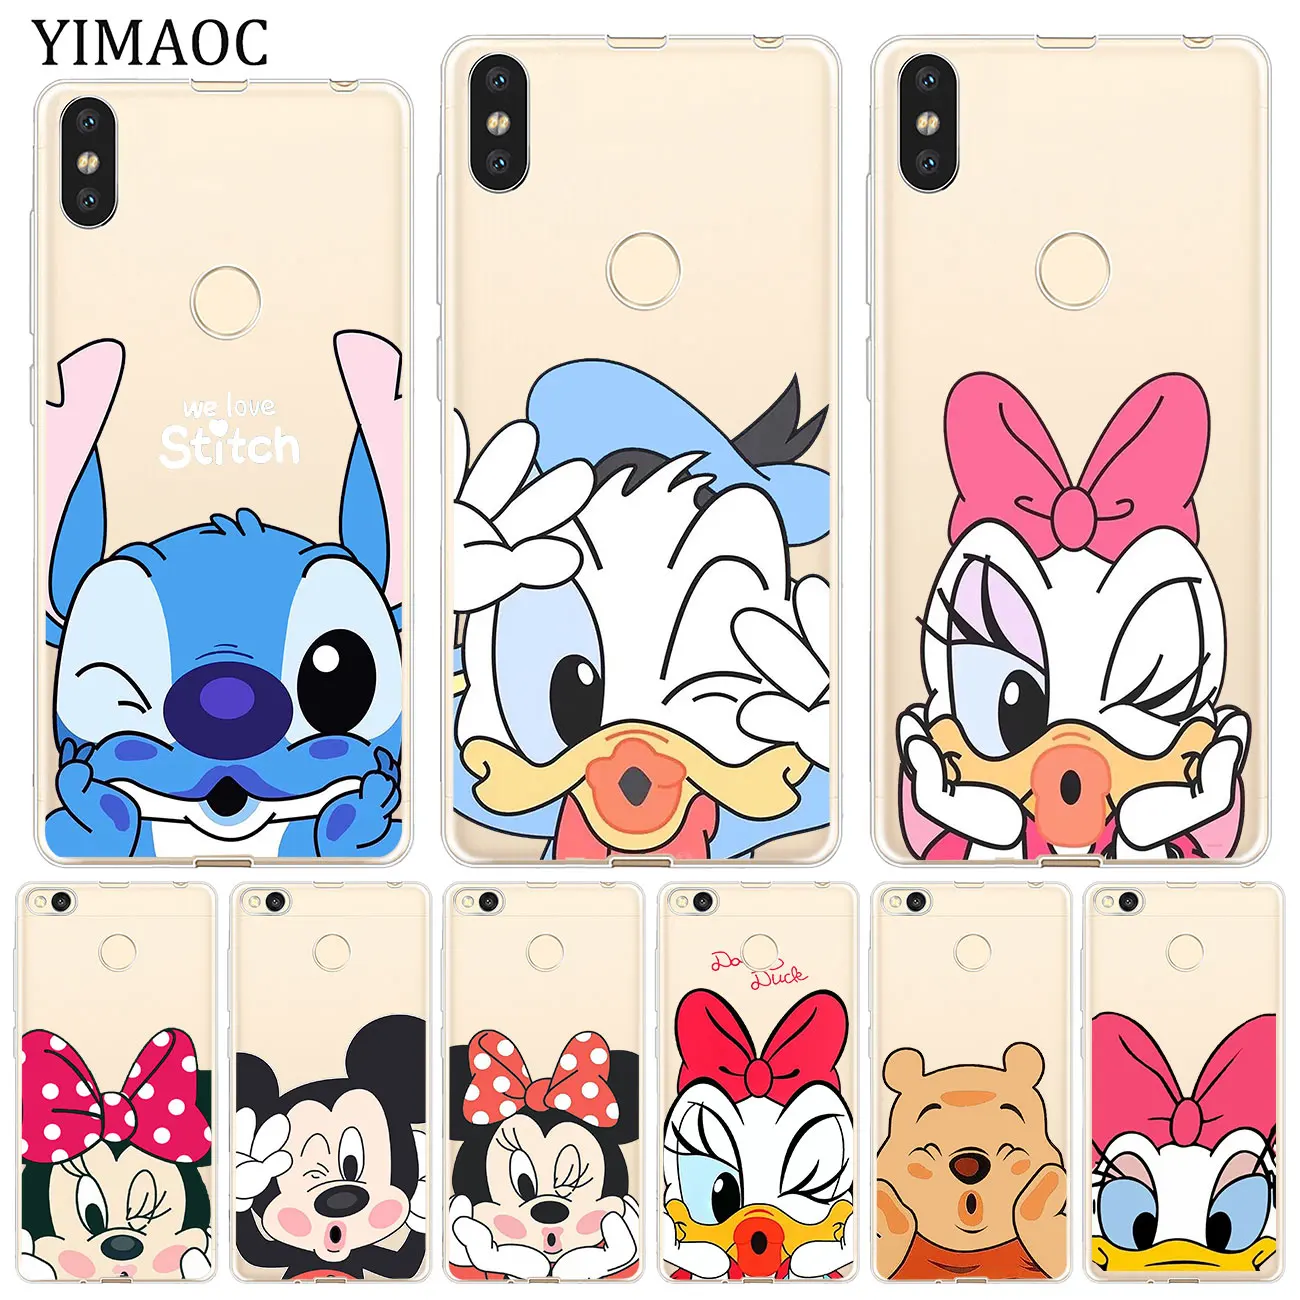 

YIMAOC Cartoon Mickey Mouse lovely Soft Case for Xiaomi Mi 9 9T CC9 CC9E A3 Pro 8 SE A2 Lite A1 MiX 2S MAX 3 pocophone f1 MI9